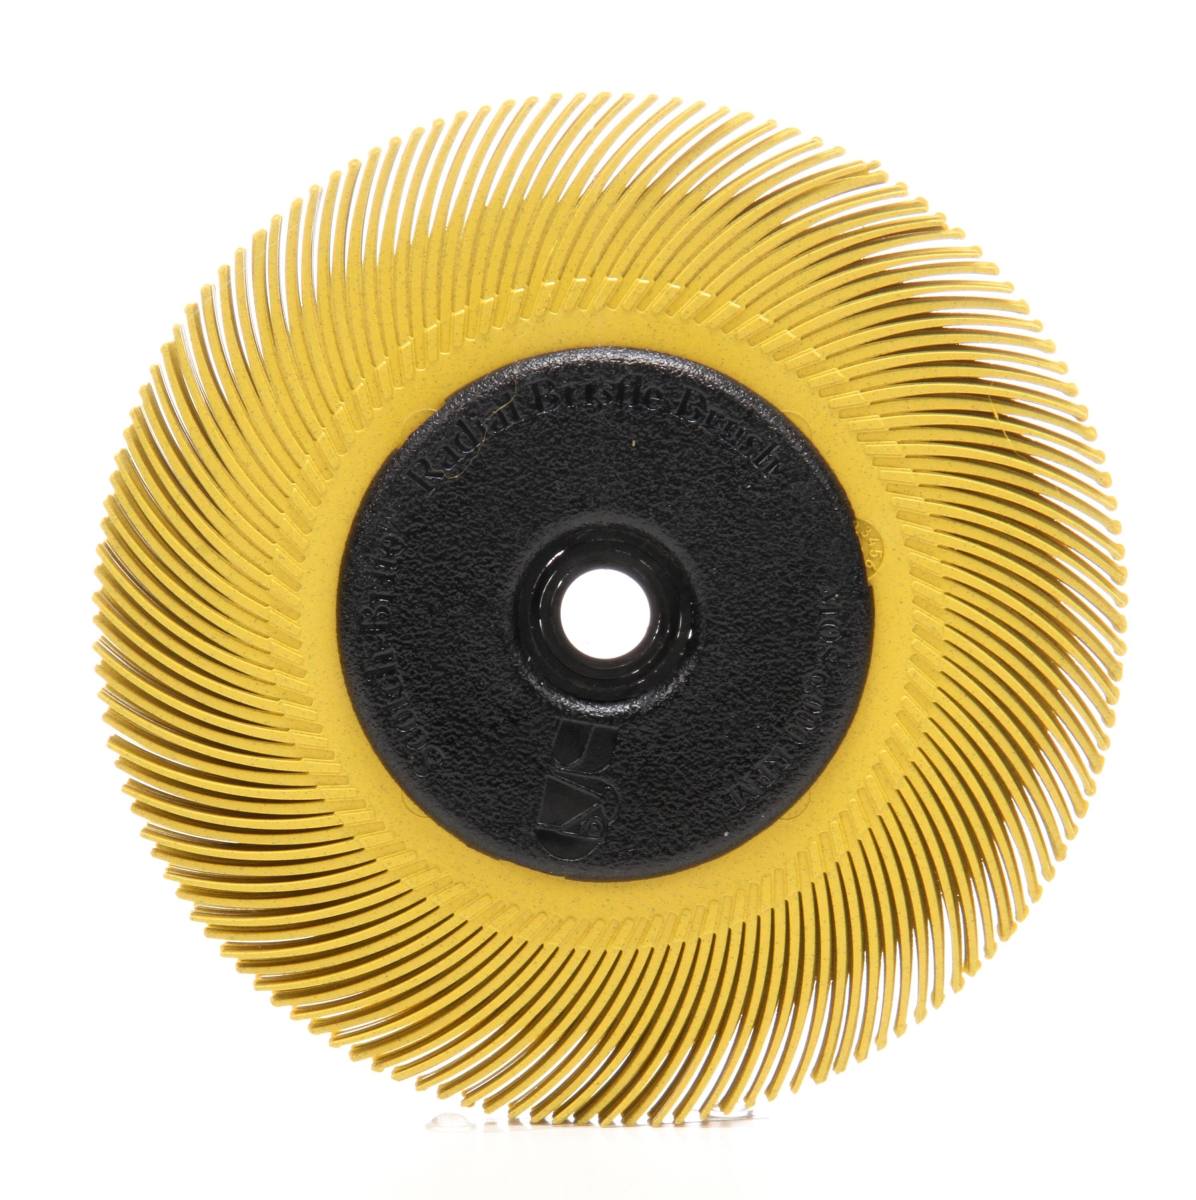 3M Scotch-Brite Radial Bristle Disc BB-ZB with flange, yellow, 193.5 mm, P80, Type C #33129